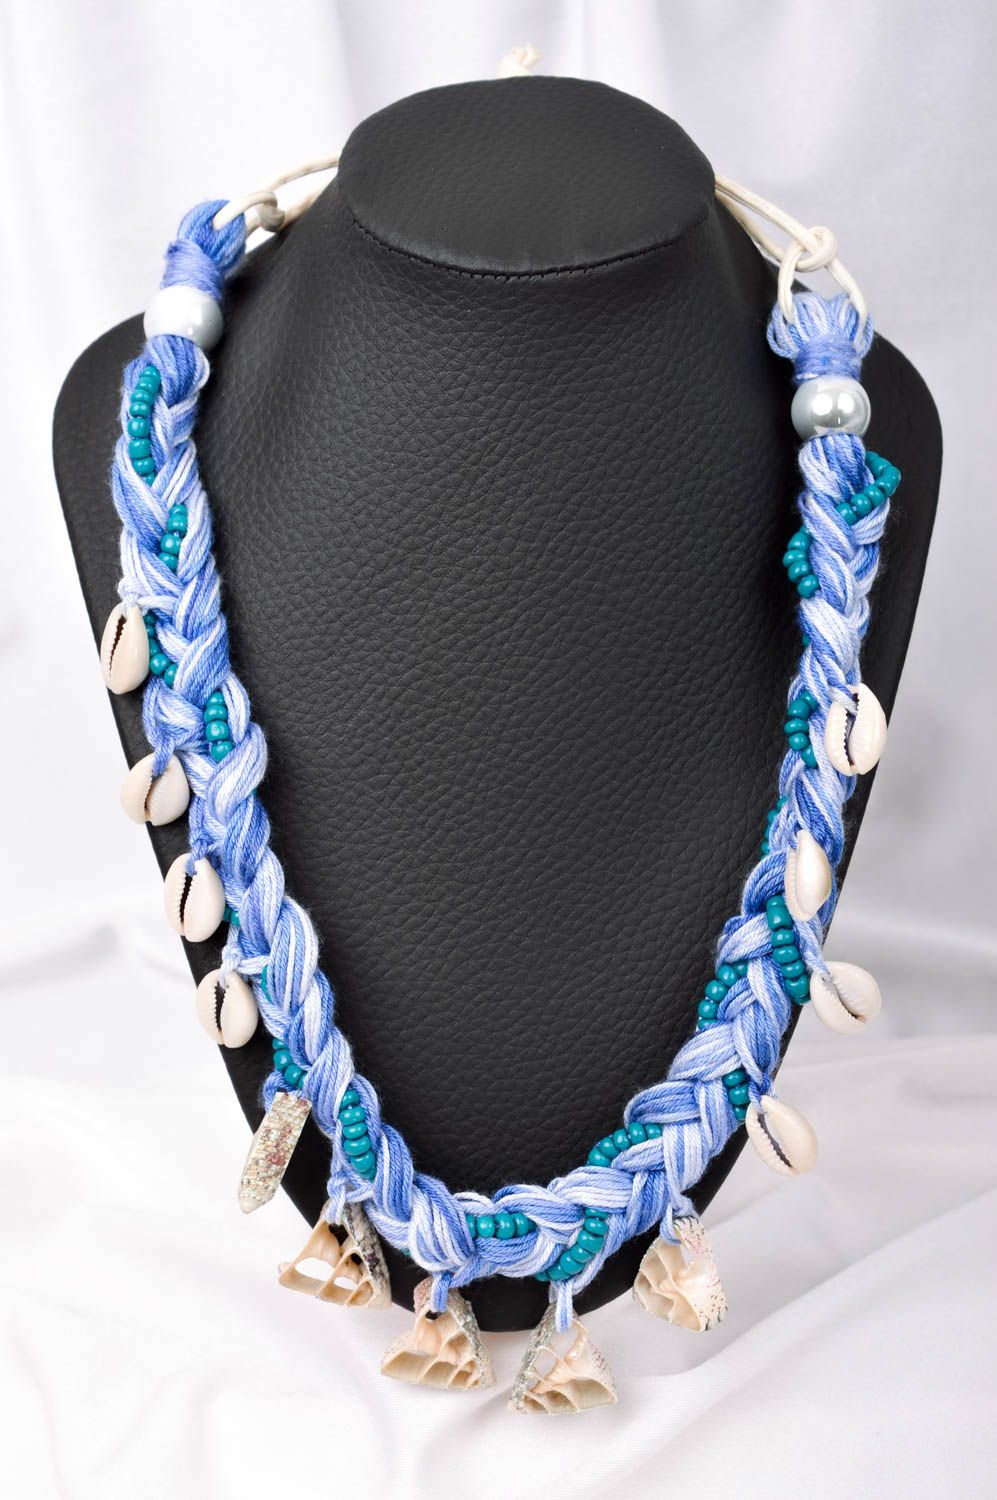 Handmade textile necklace beautiful jewellery ideas artisan jewelry designs photo 1